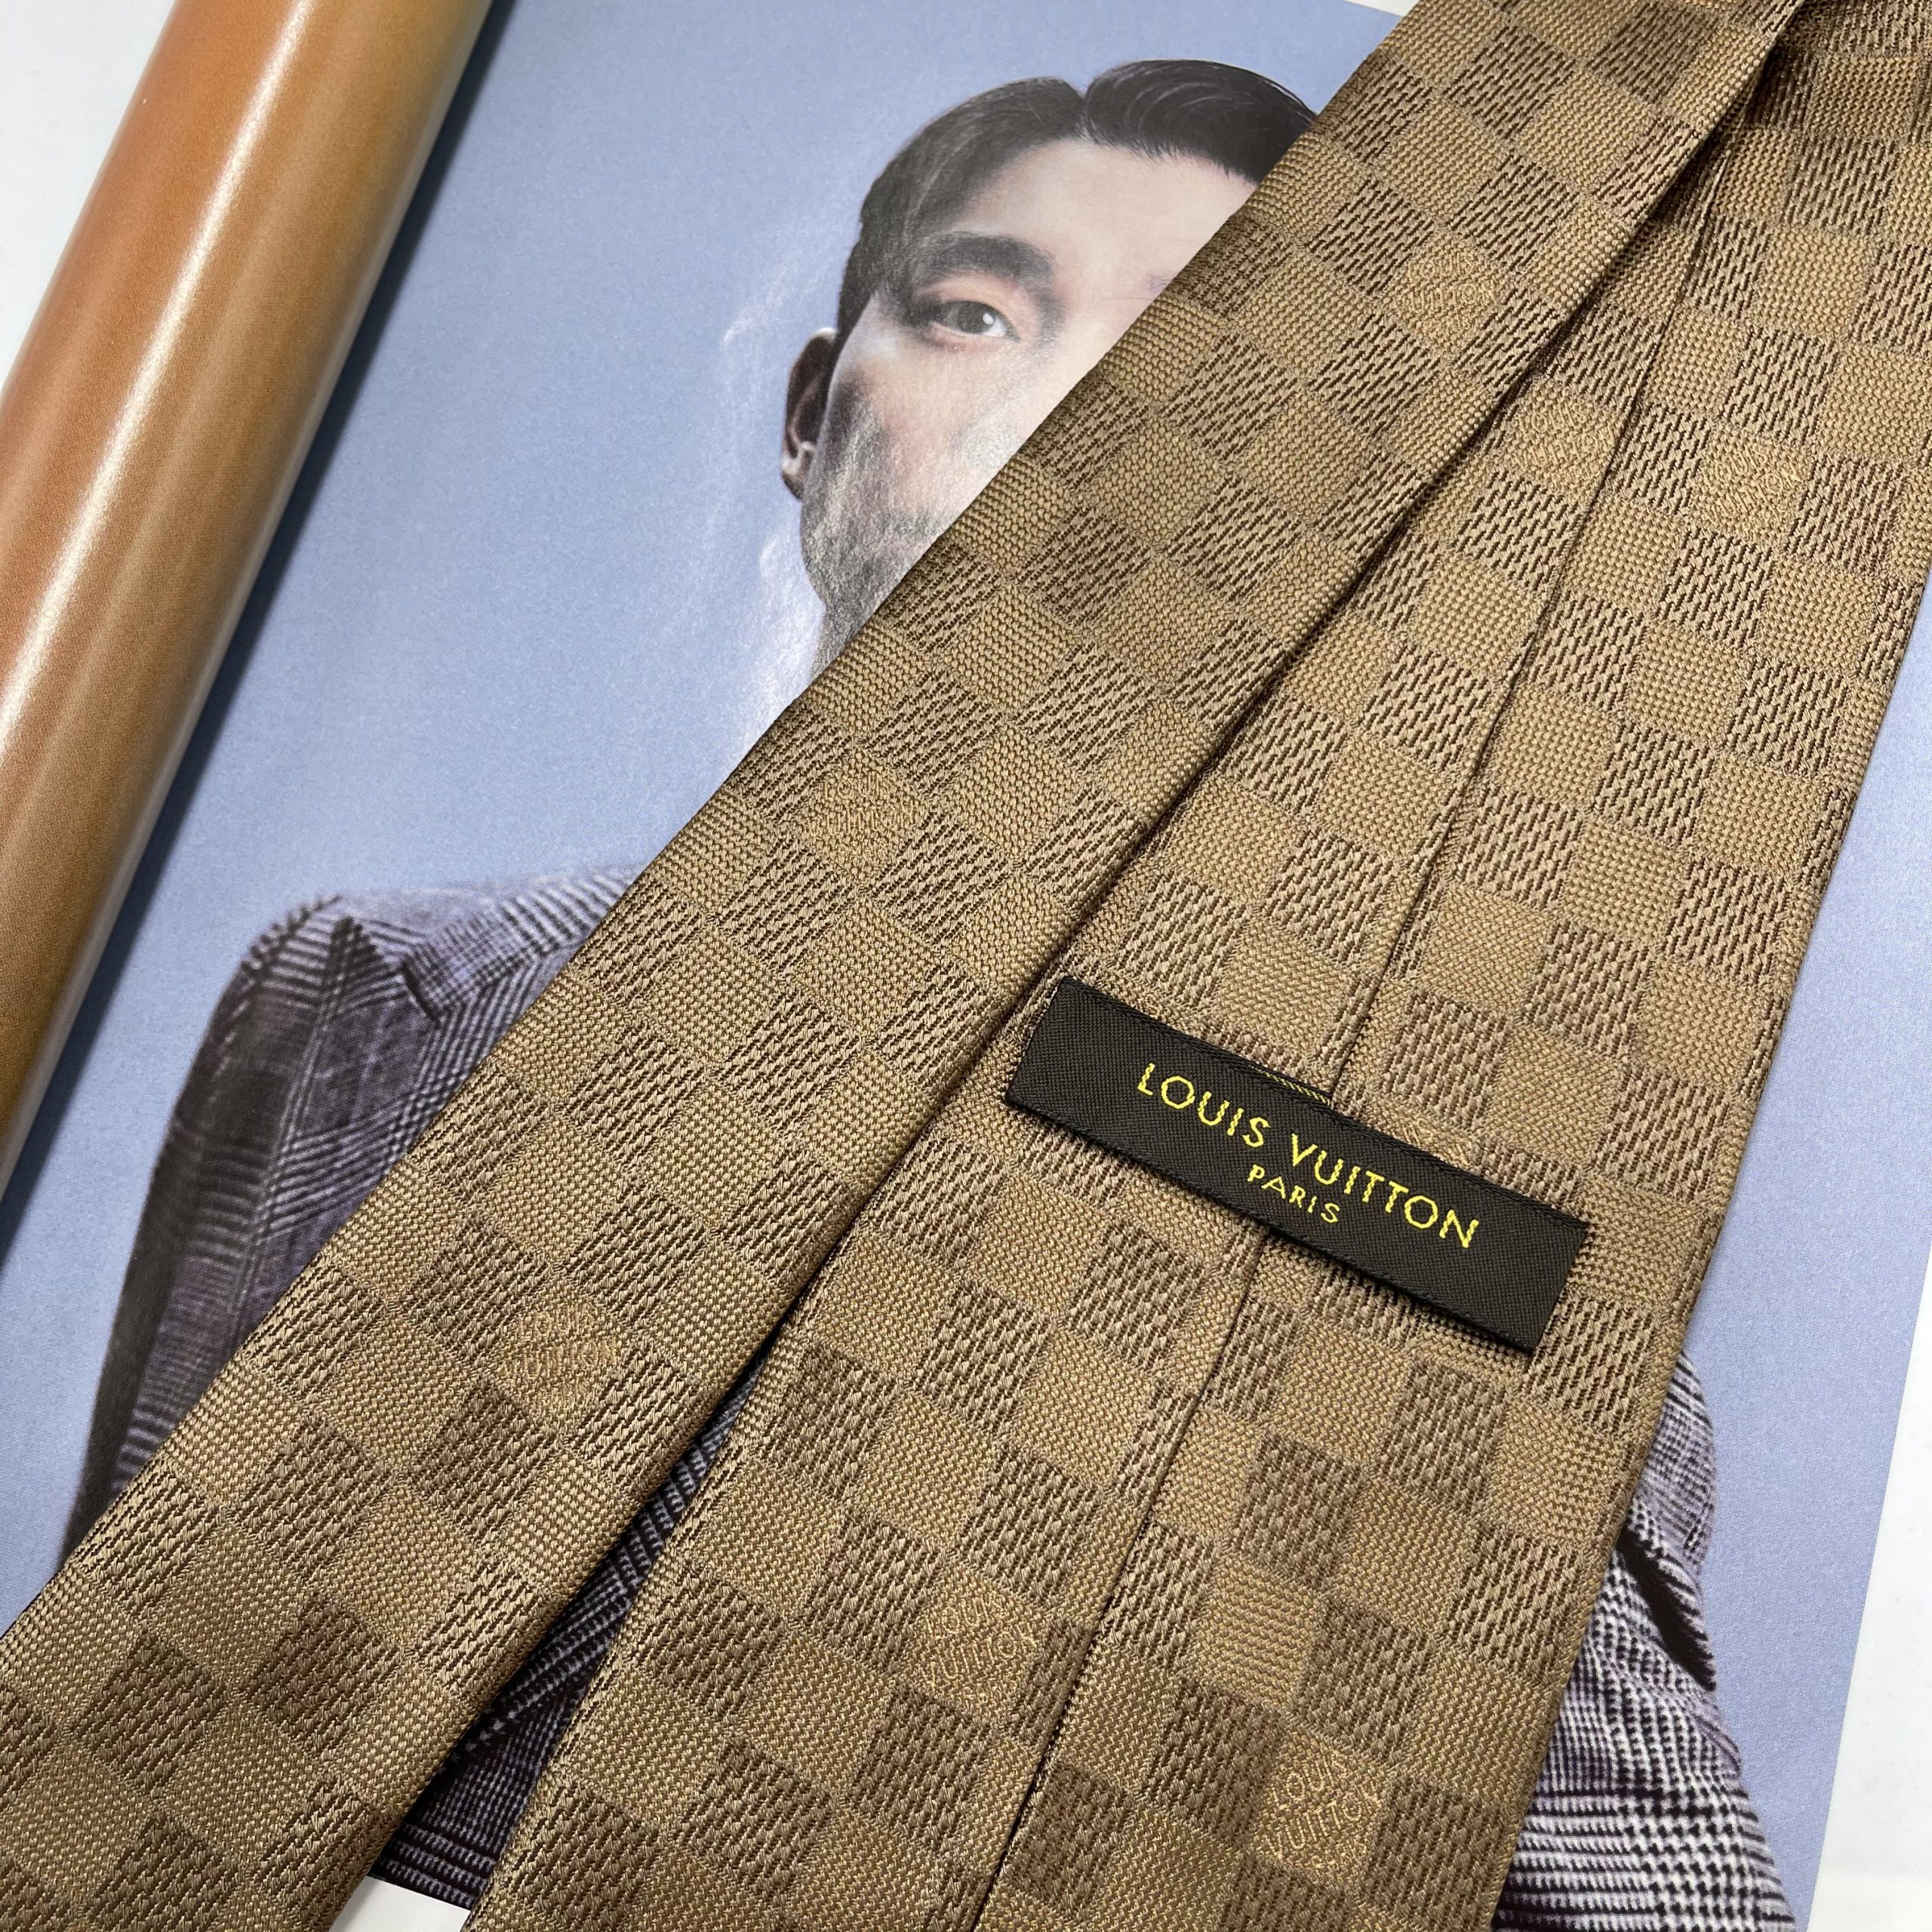 Lv Louis Vuitton Monogram Tie Navy Tie